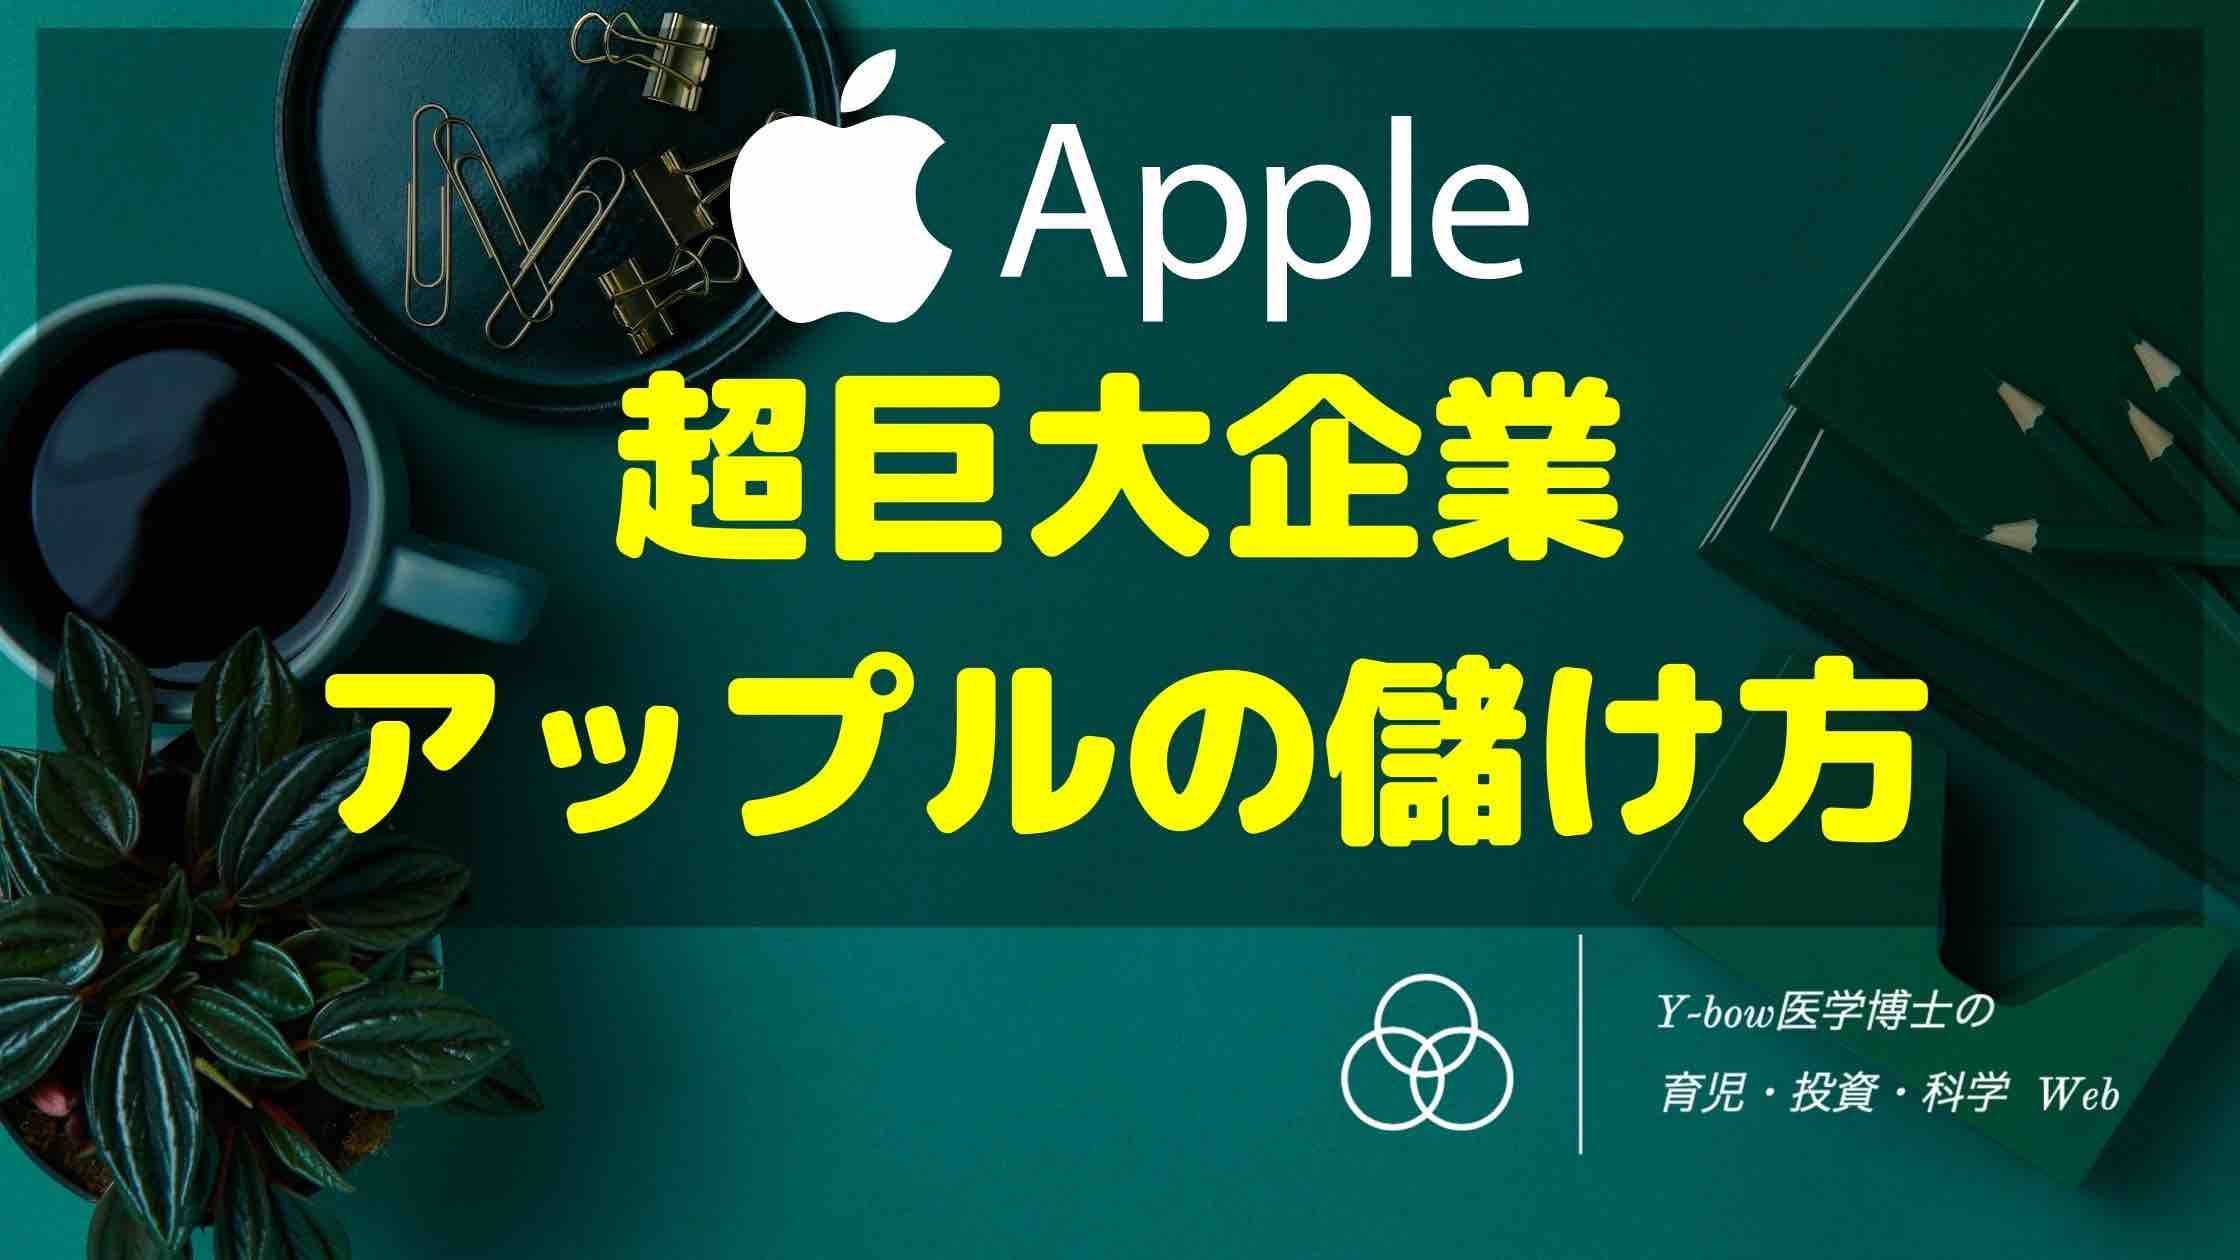 Apple-business